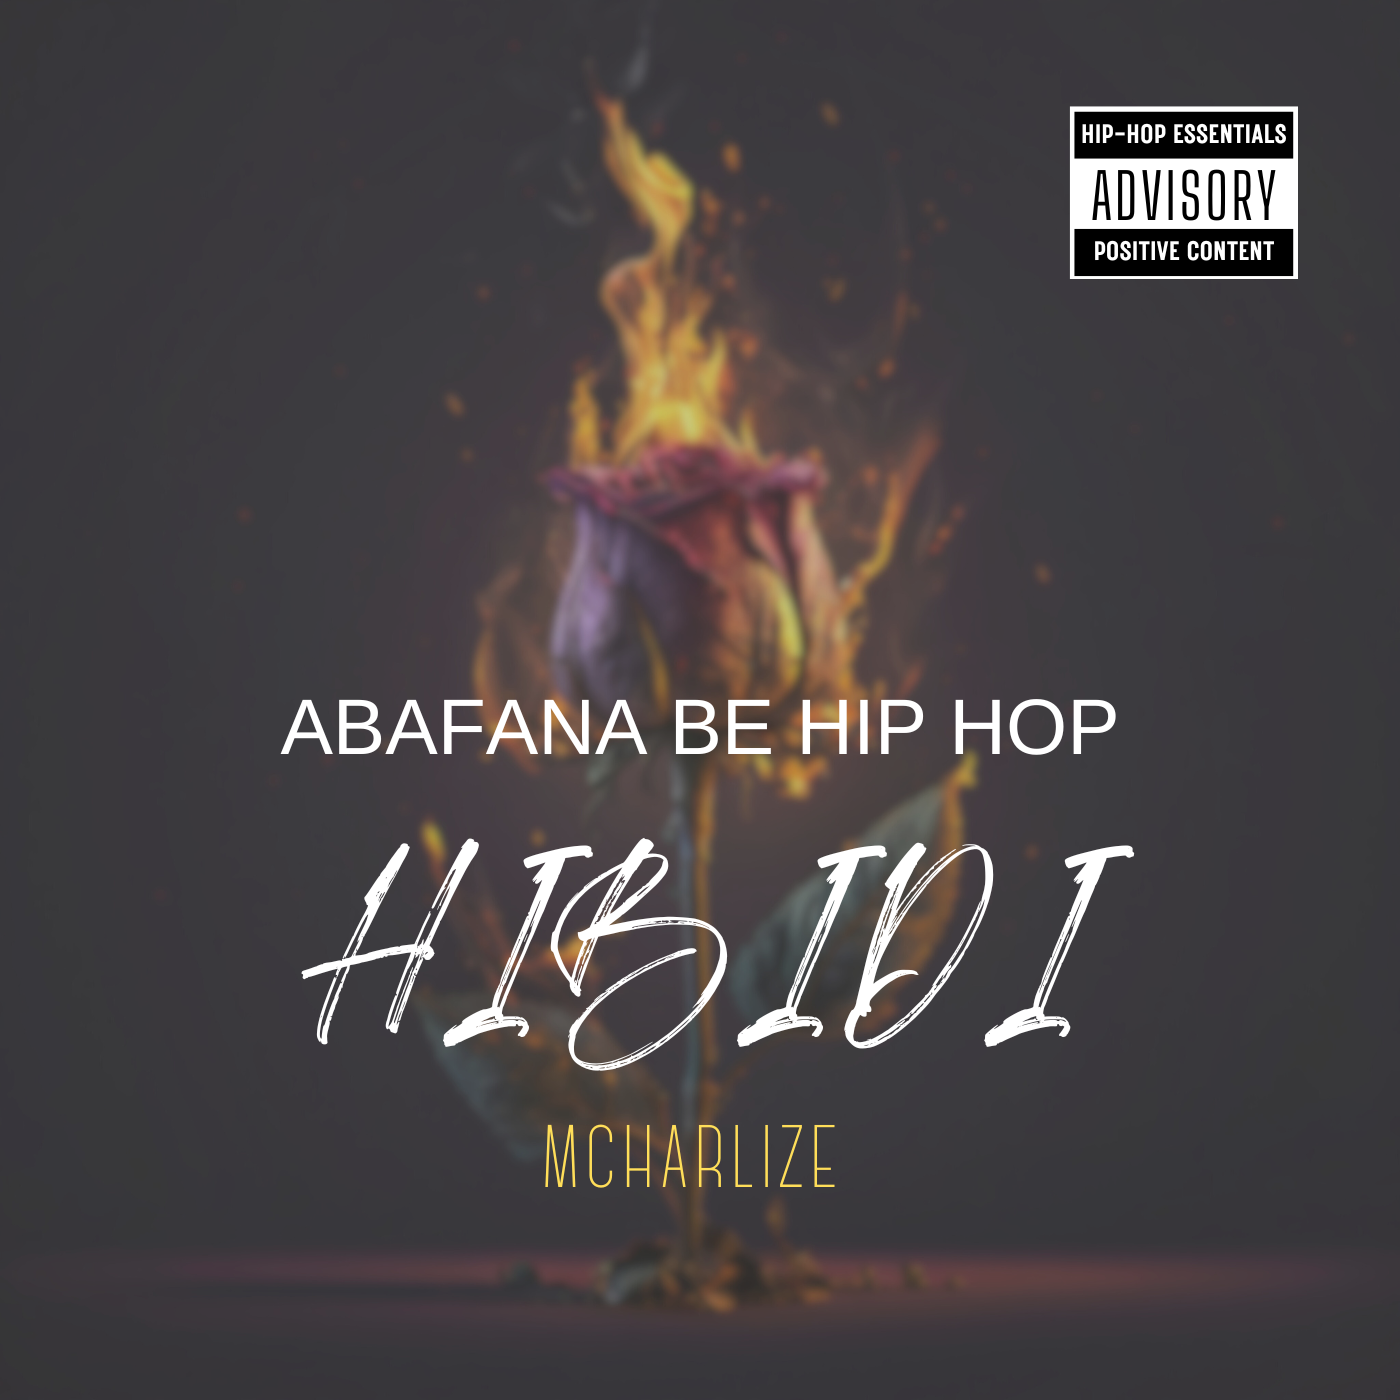 Hibidi/Abafana be hip hop - Mcharlize